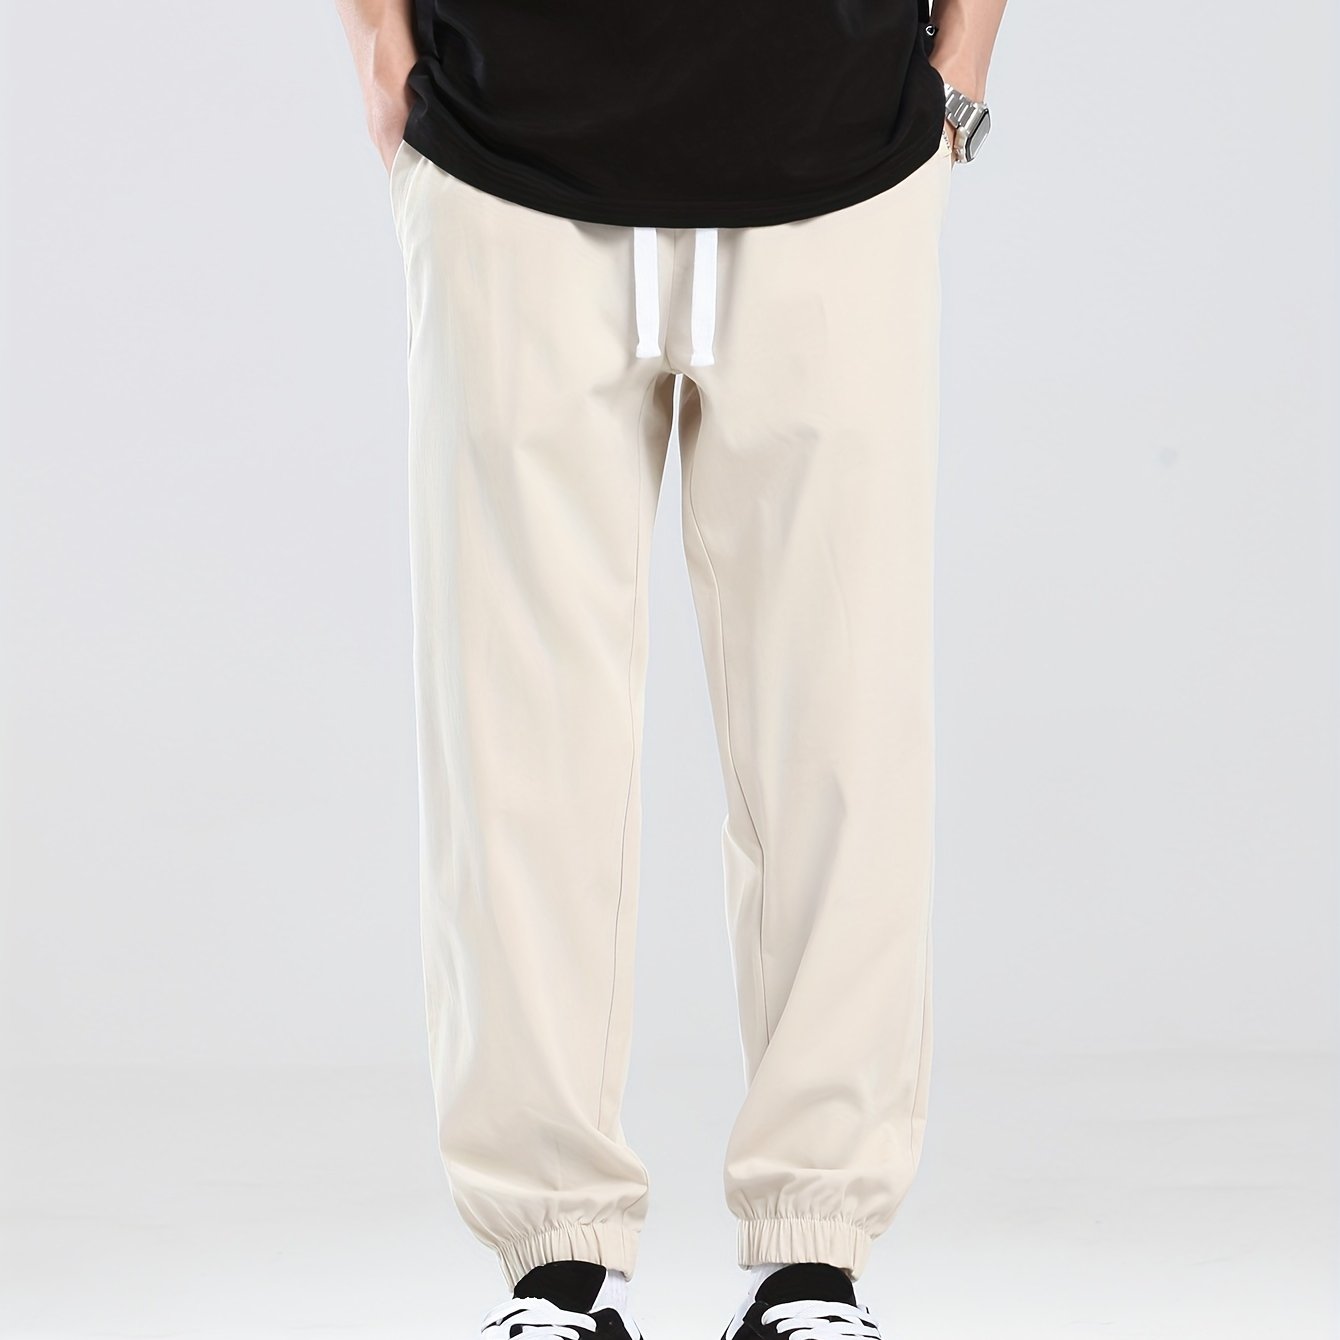 Trendy Cargo Pants, Loose Casual Outdoor Pants, Men's Work Pants Outdoors Streetwear Hiphop Style